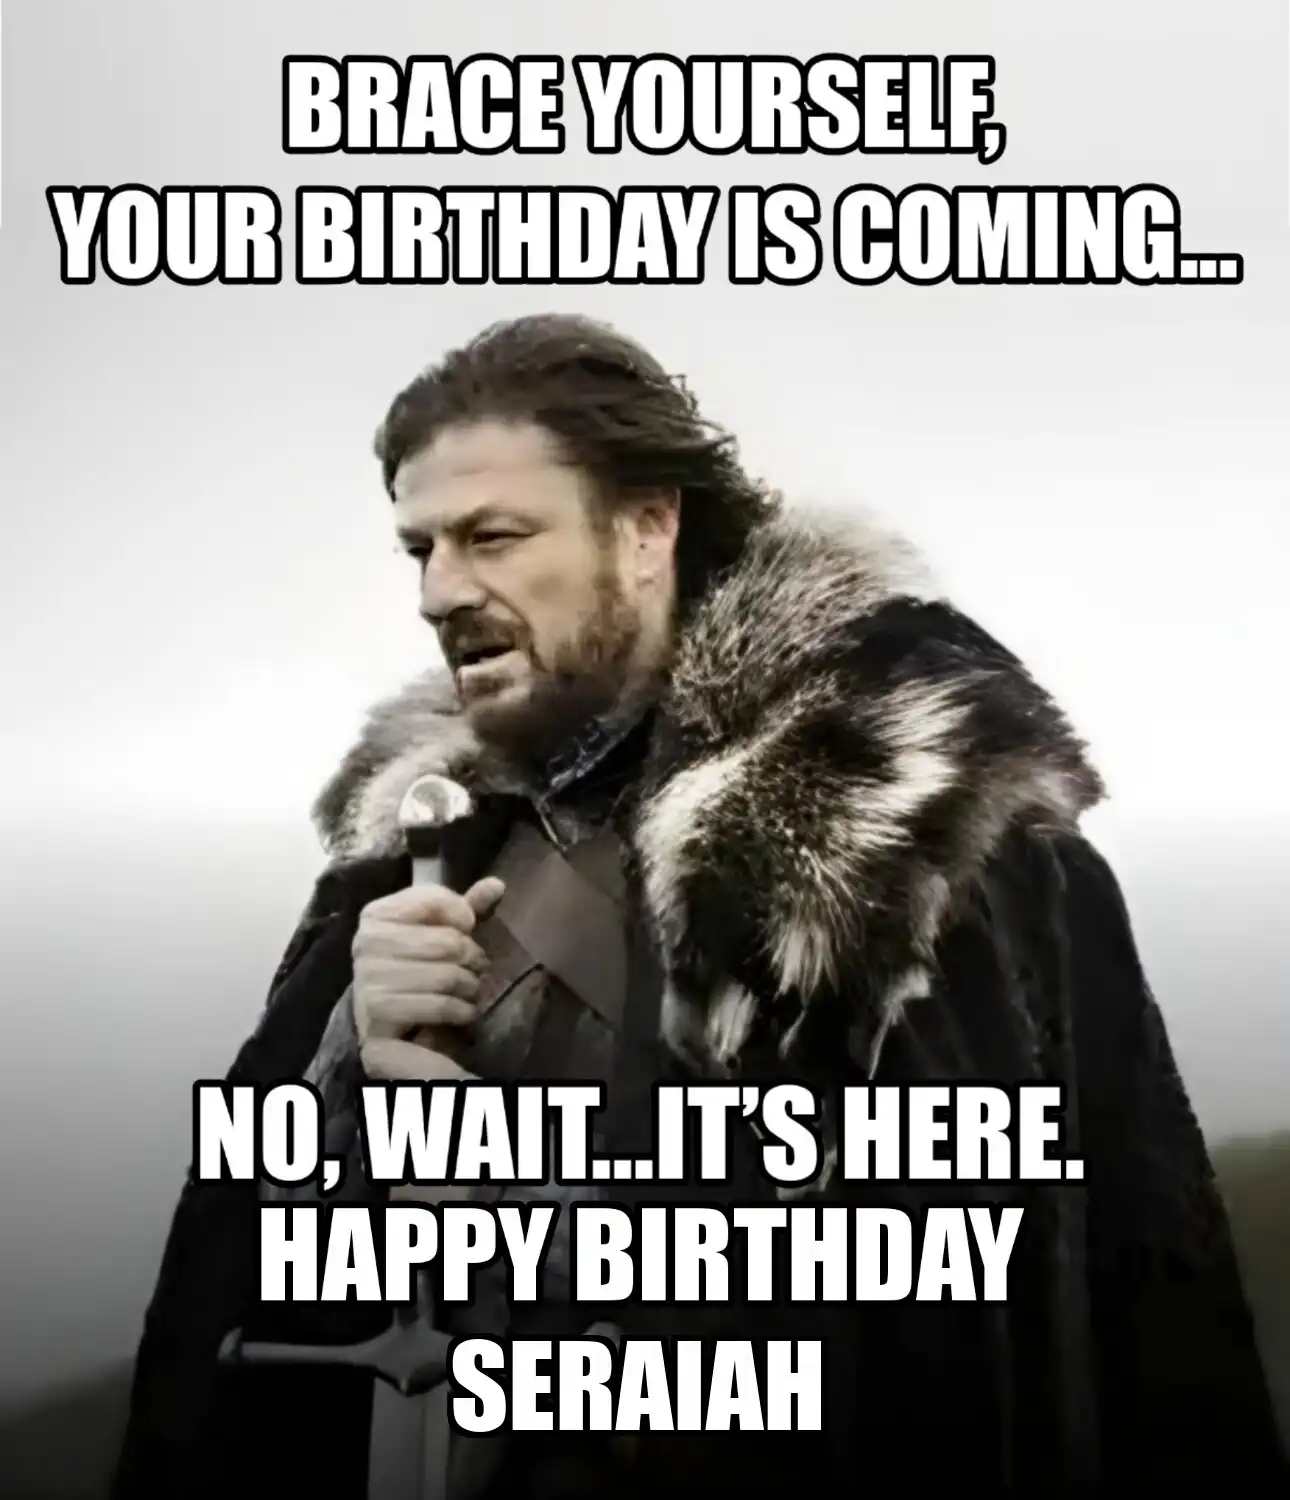 Happy Birthday Seraiah Brace Yourself Your Birthday Is Coming Meme